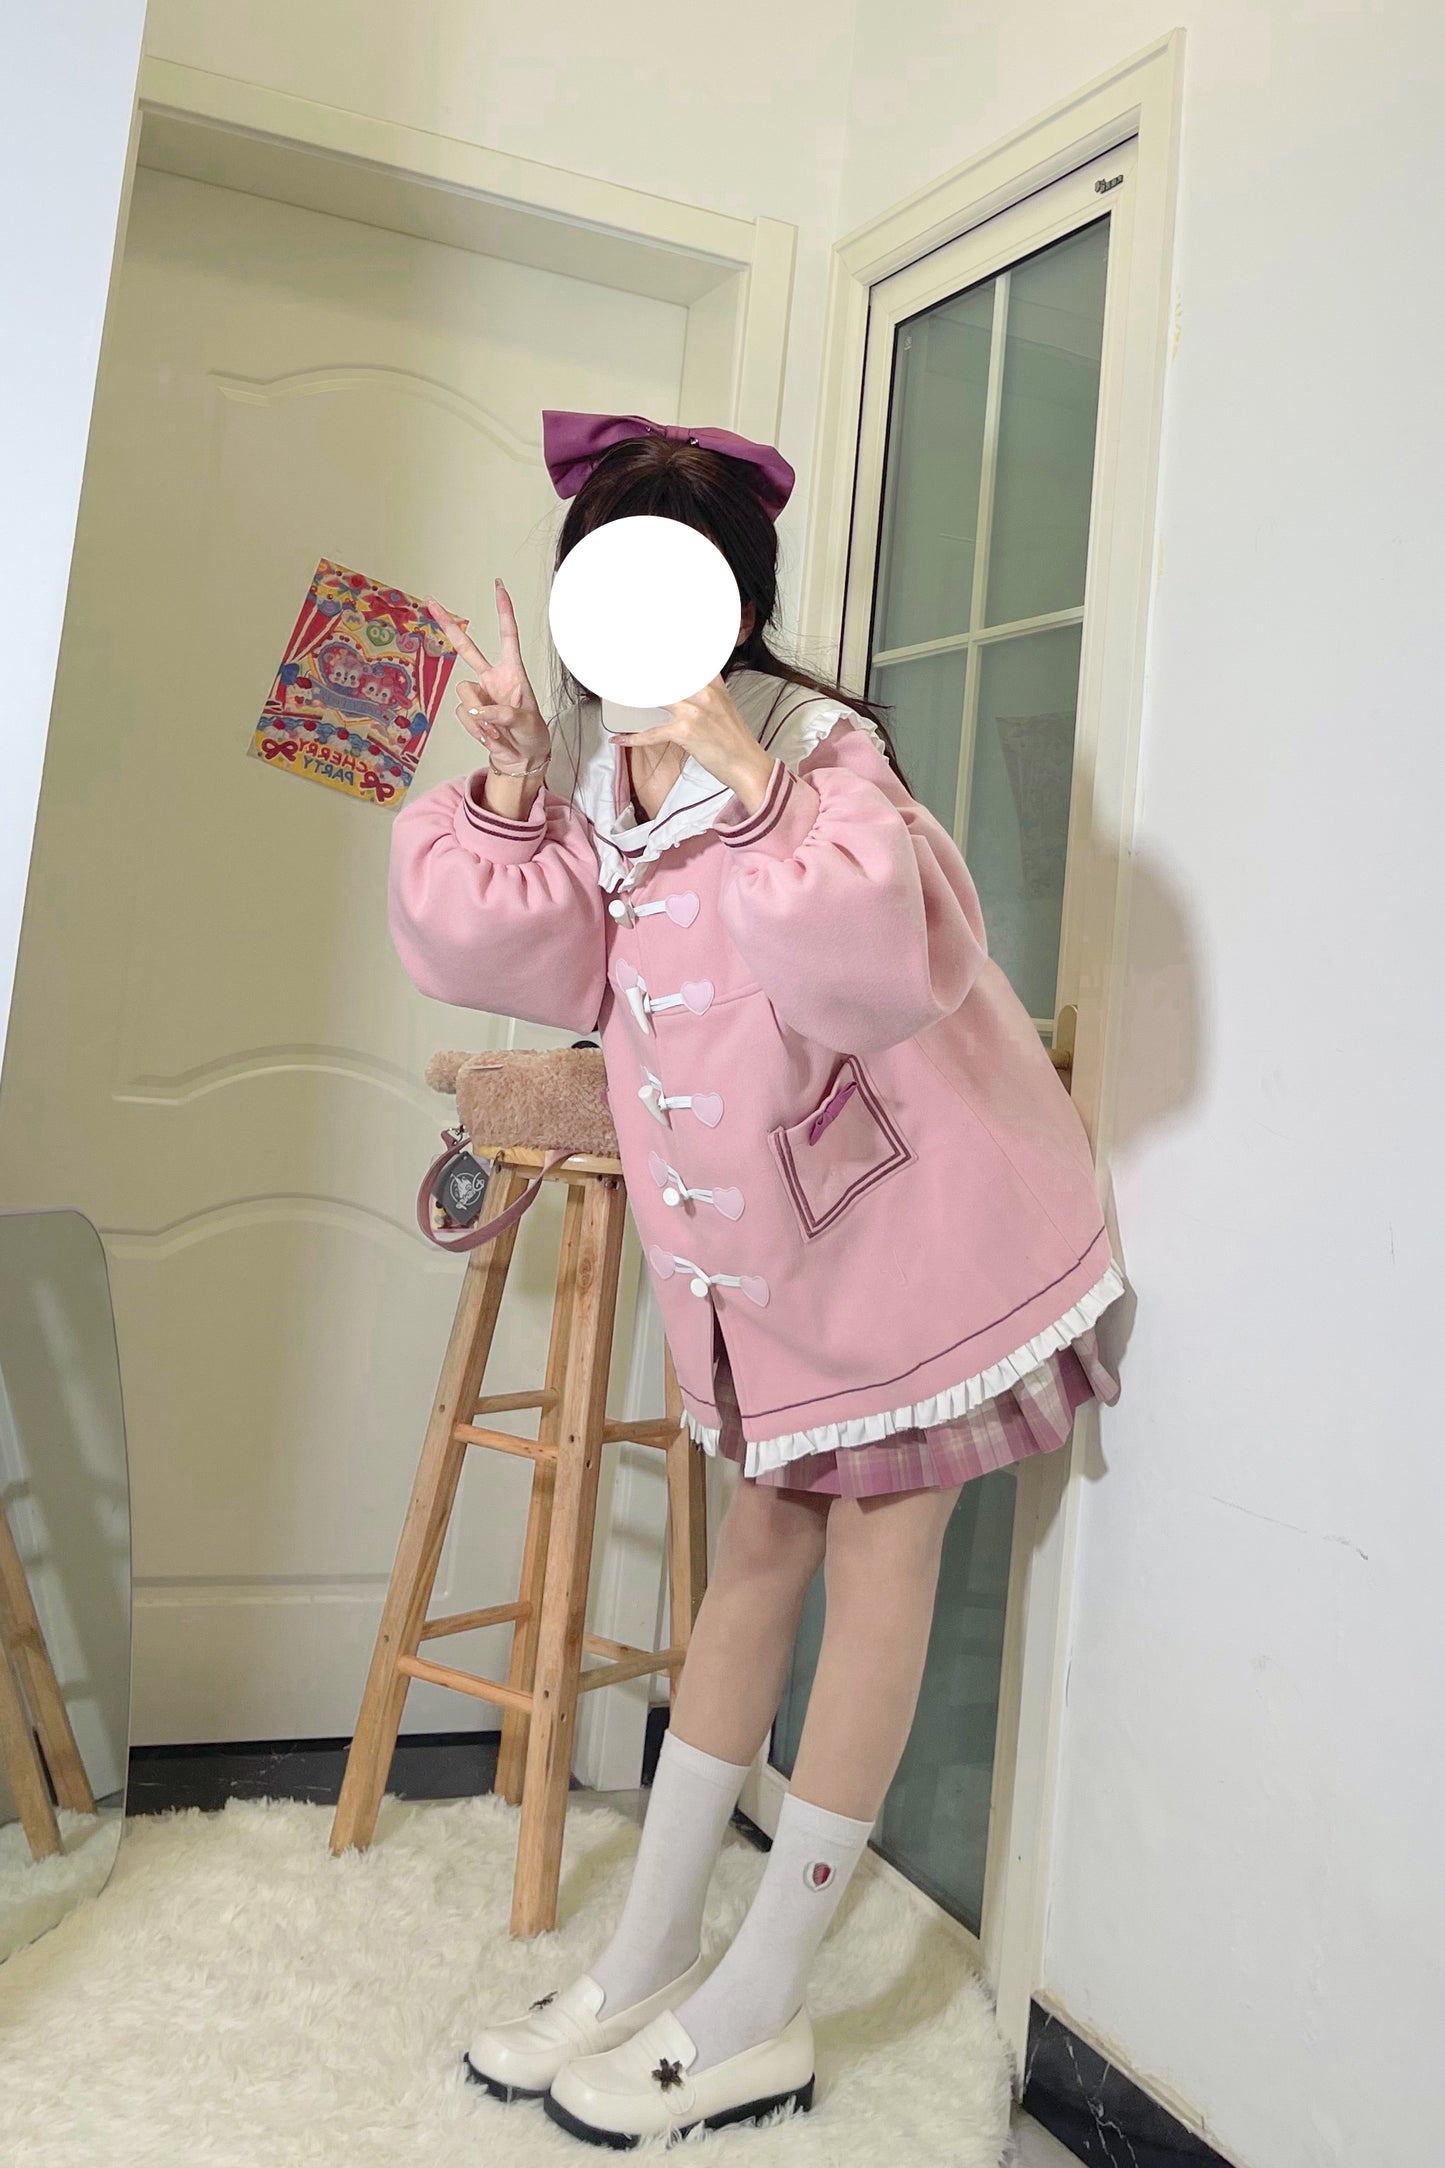 Japanese Cute Girl Women Bow Embroidery Heart Love Shape Sailor Collar Pink Black Coat Jacket